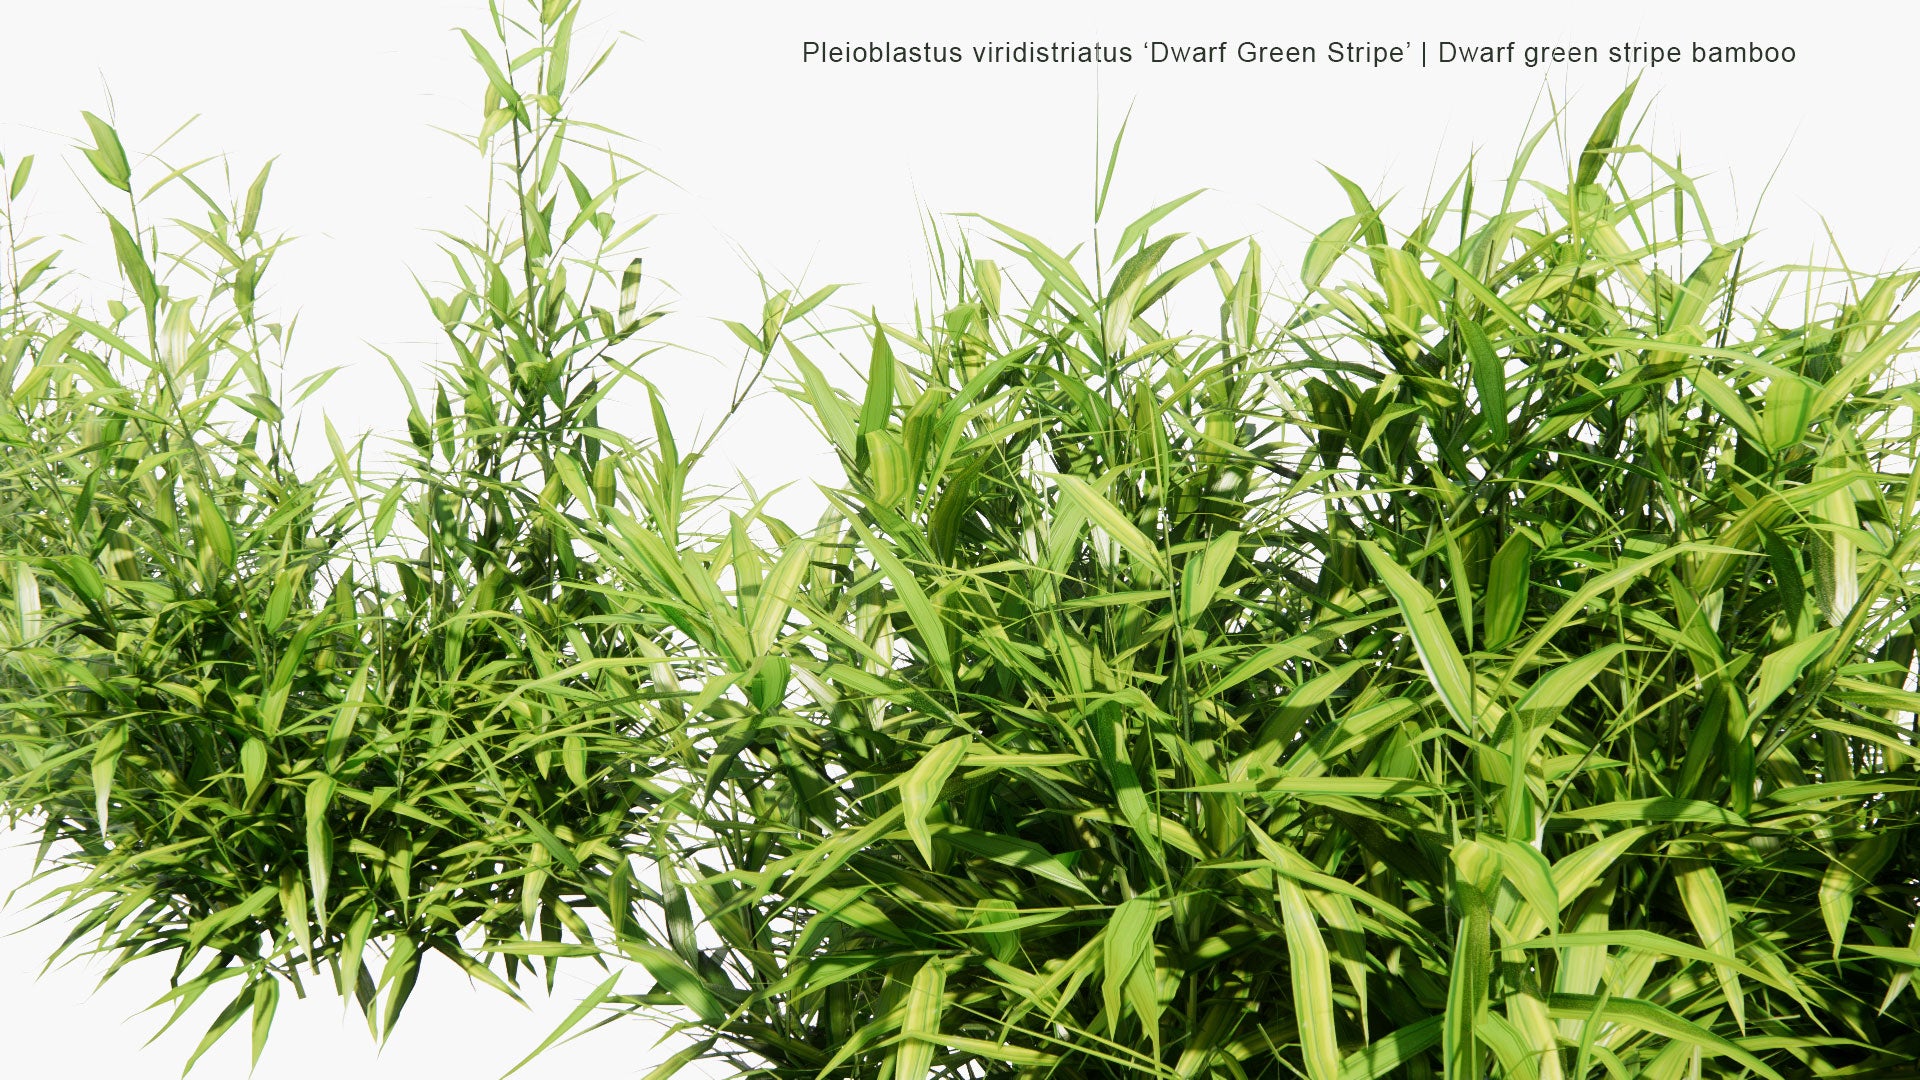 Low Poly Pleioblastus Viridistriatus 'Dwarf Green Stripe' - Dwarf Green Stripe Bamboo (3D Model)